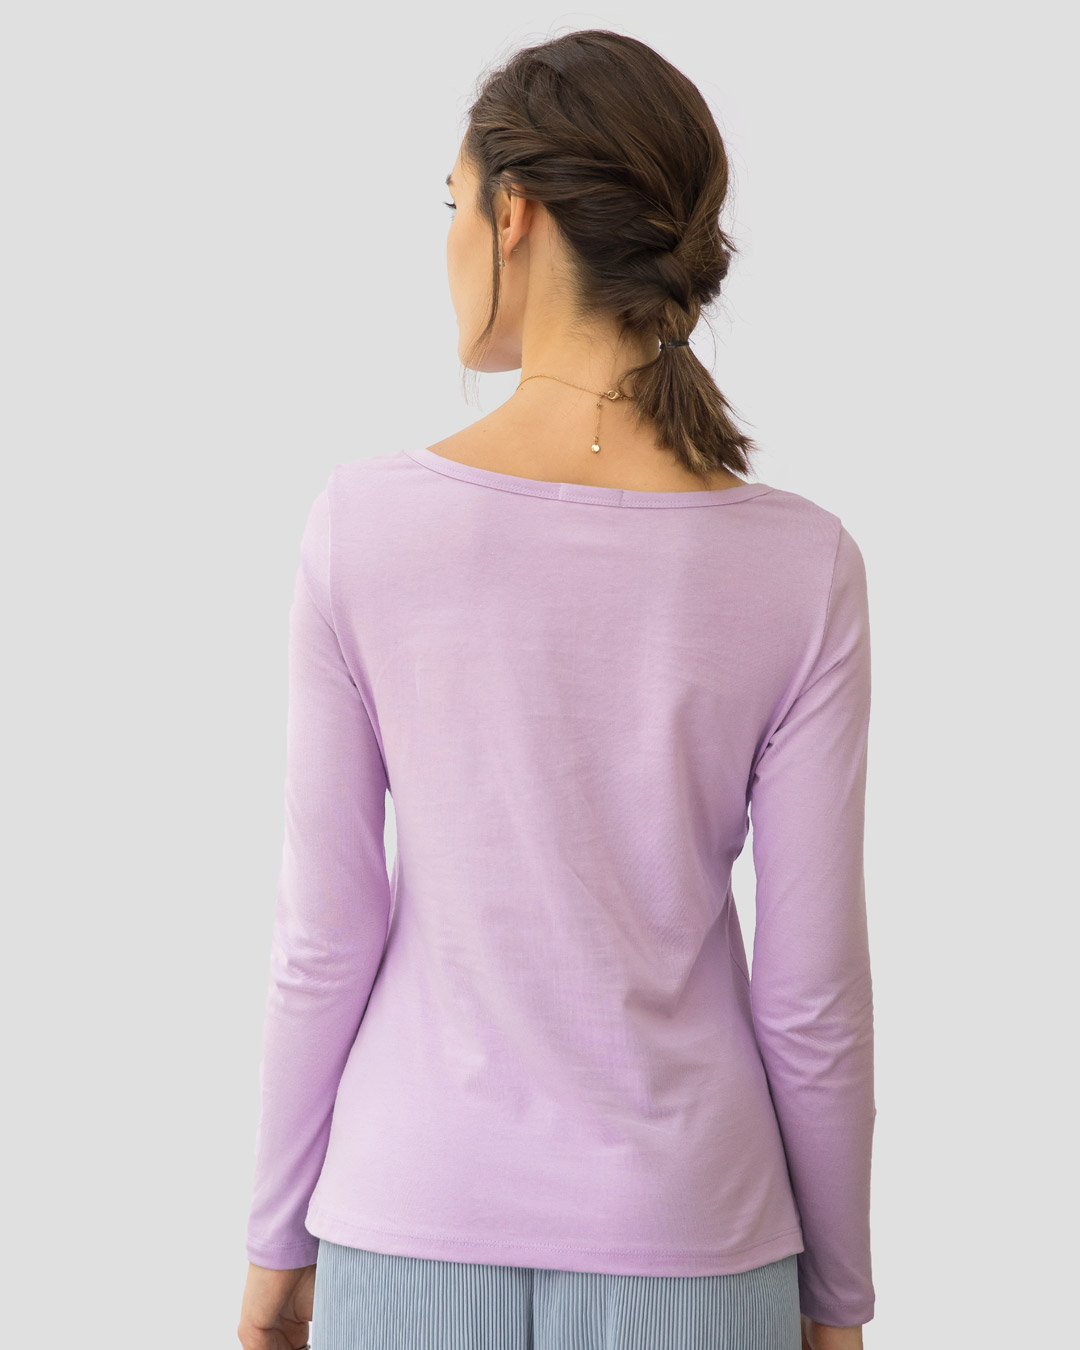 Shop I Purple You Heart Scoop Neck Full Sleeve T-Shirt Lilac Breeze-Back